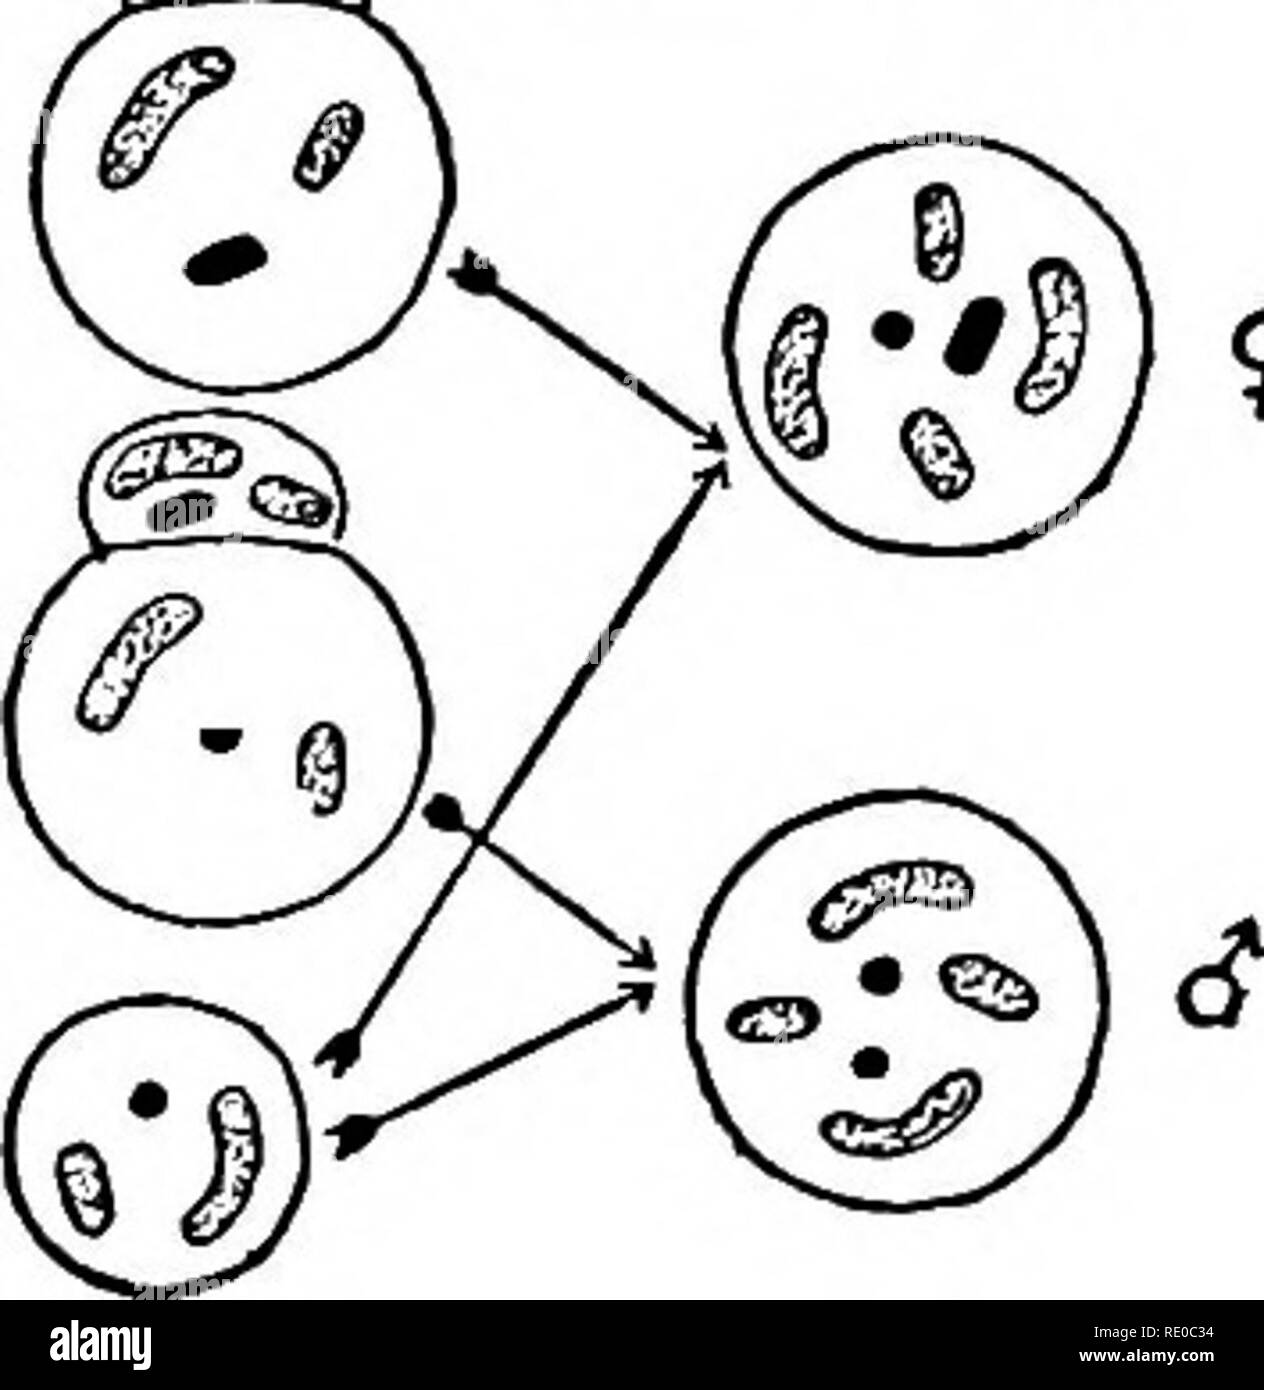 El germen-ciclo celular en animales . Las células. 264 Germen-CICLO CELULAR  EN ANIMALES Reducción jUpe huevos División ^^^ p^iar cuerpo Oogonium (f.f^  ^^•'v'Vv {^.%% ofertilized g"^/¥ Huevo- ogonium Spermat :^1F&LT;^.  Espermatozoides